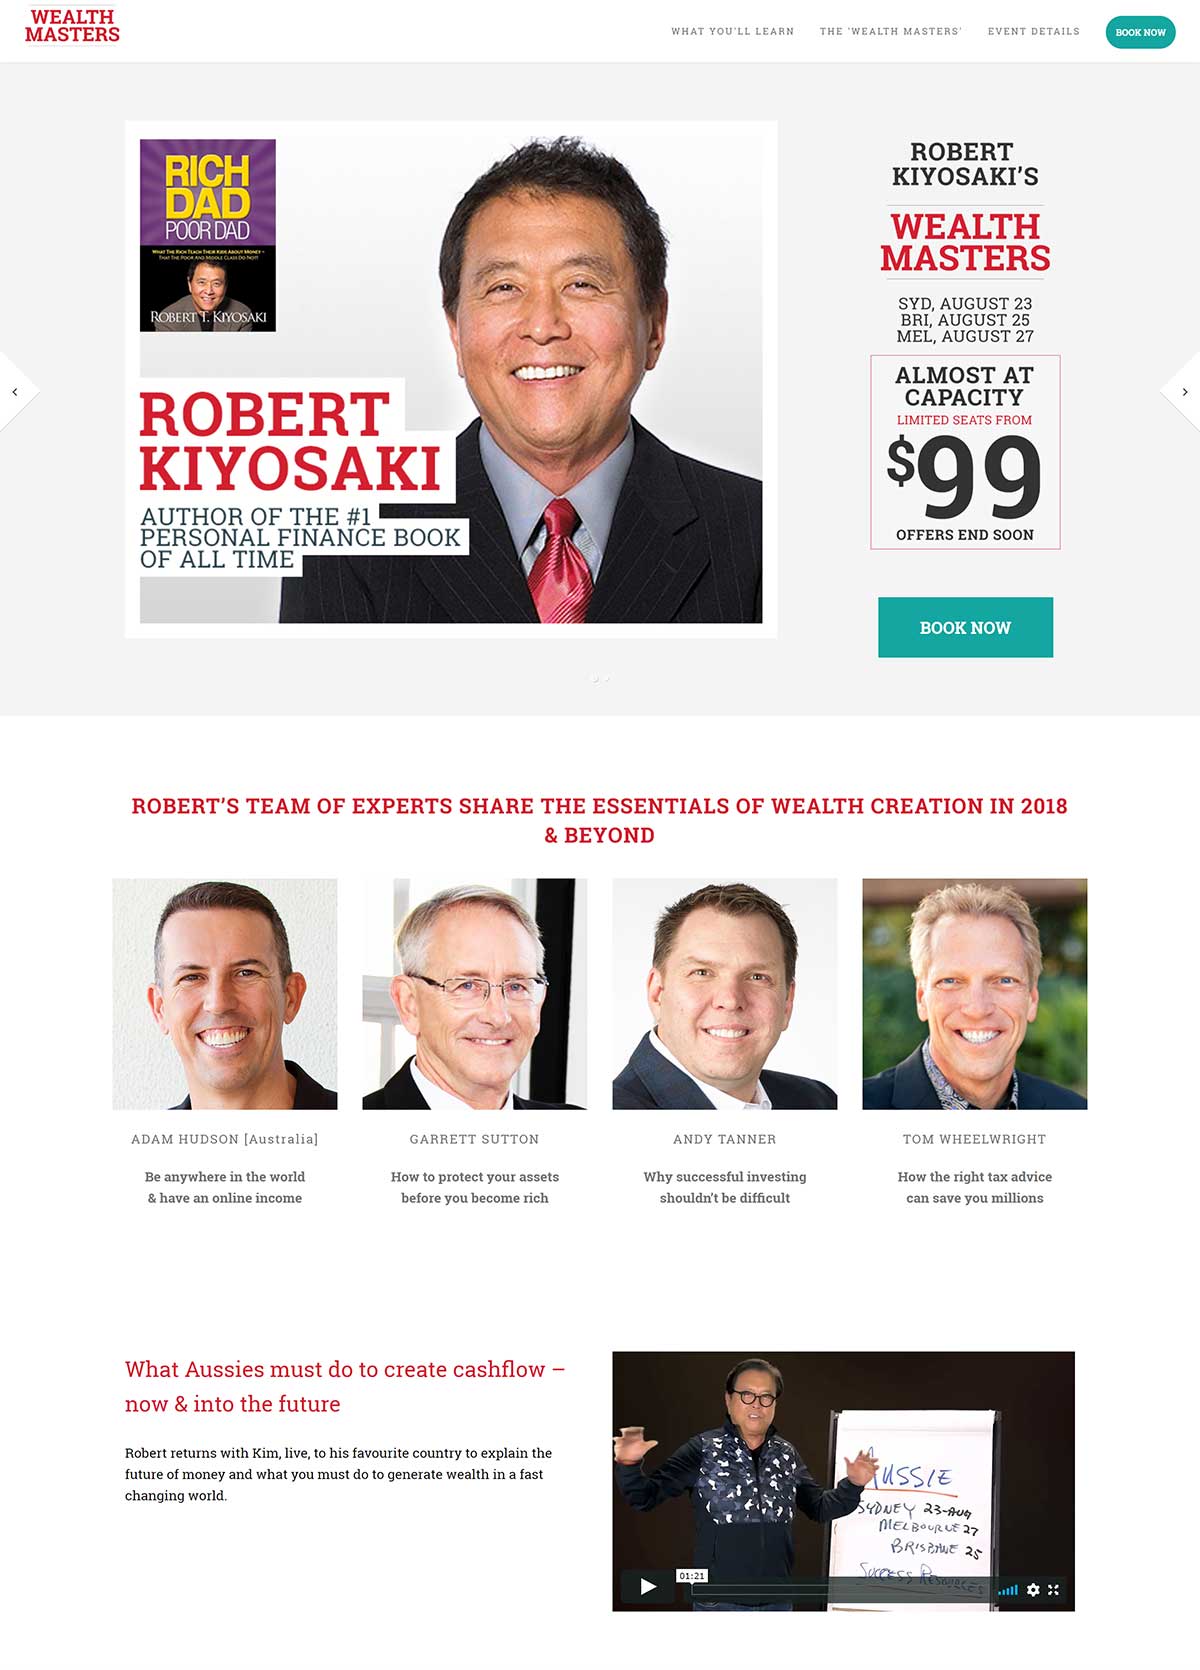 Robert Kiyosaki's Wealth Masters